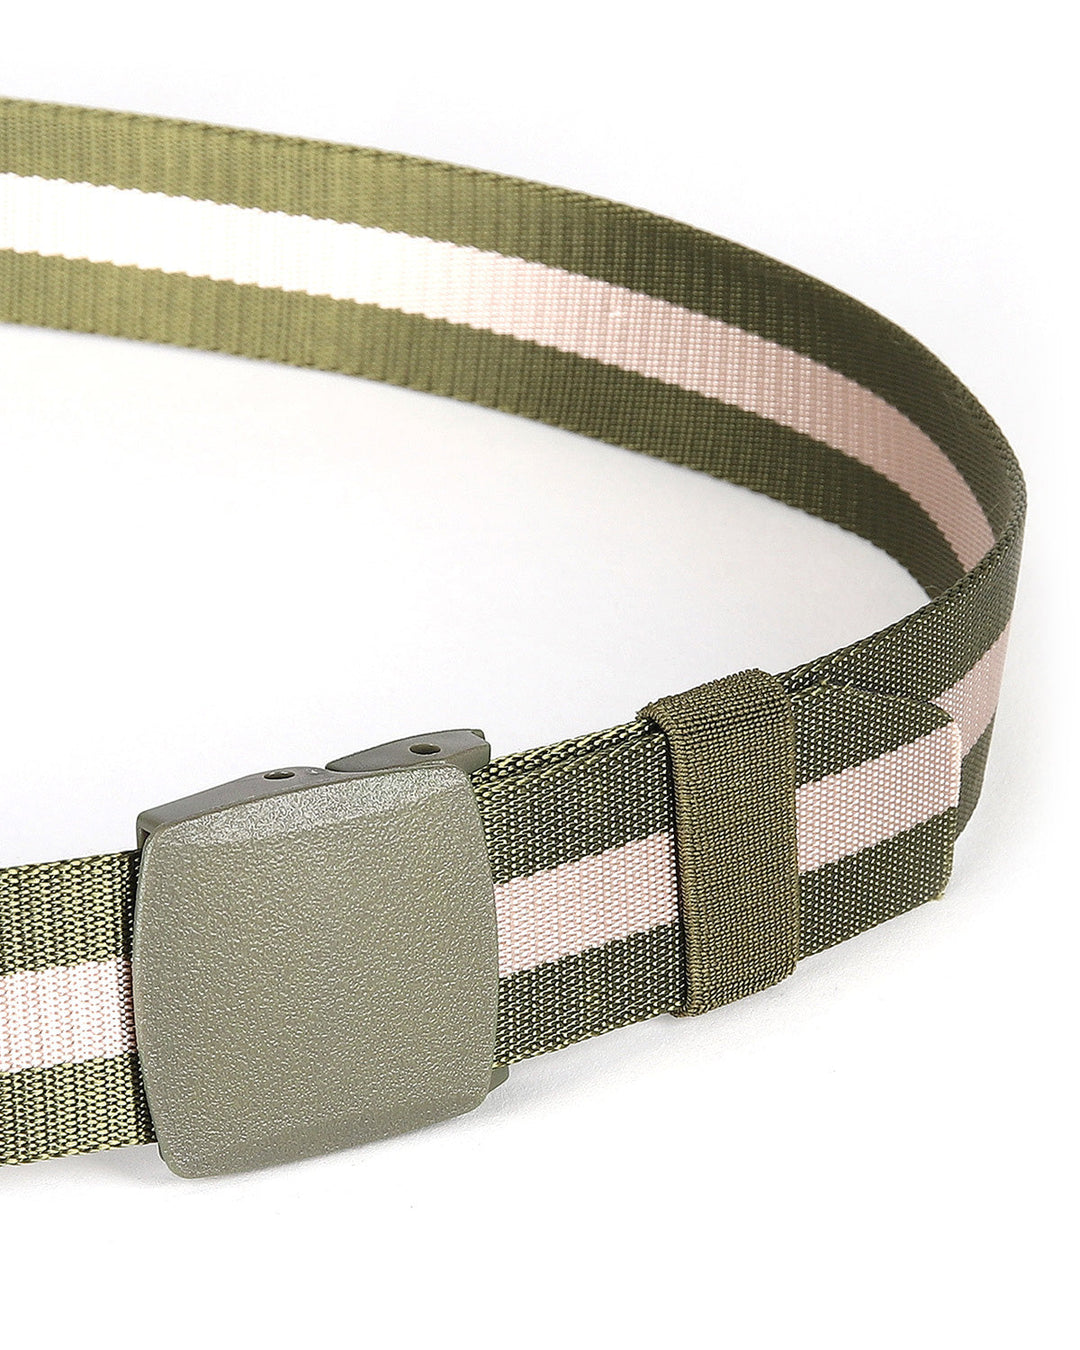 One Size Adjustable Strap Stripe Nylon Web Belt with Plastic Buckle